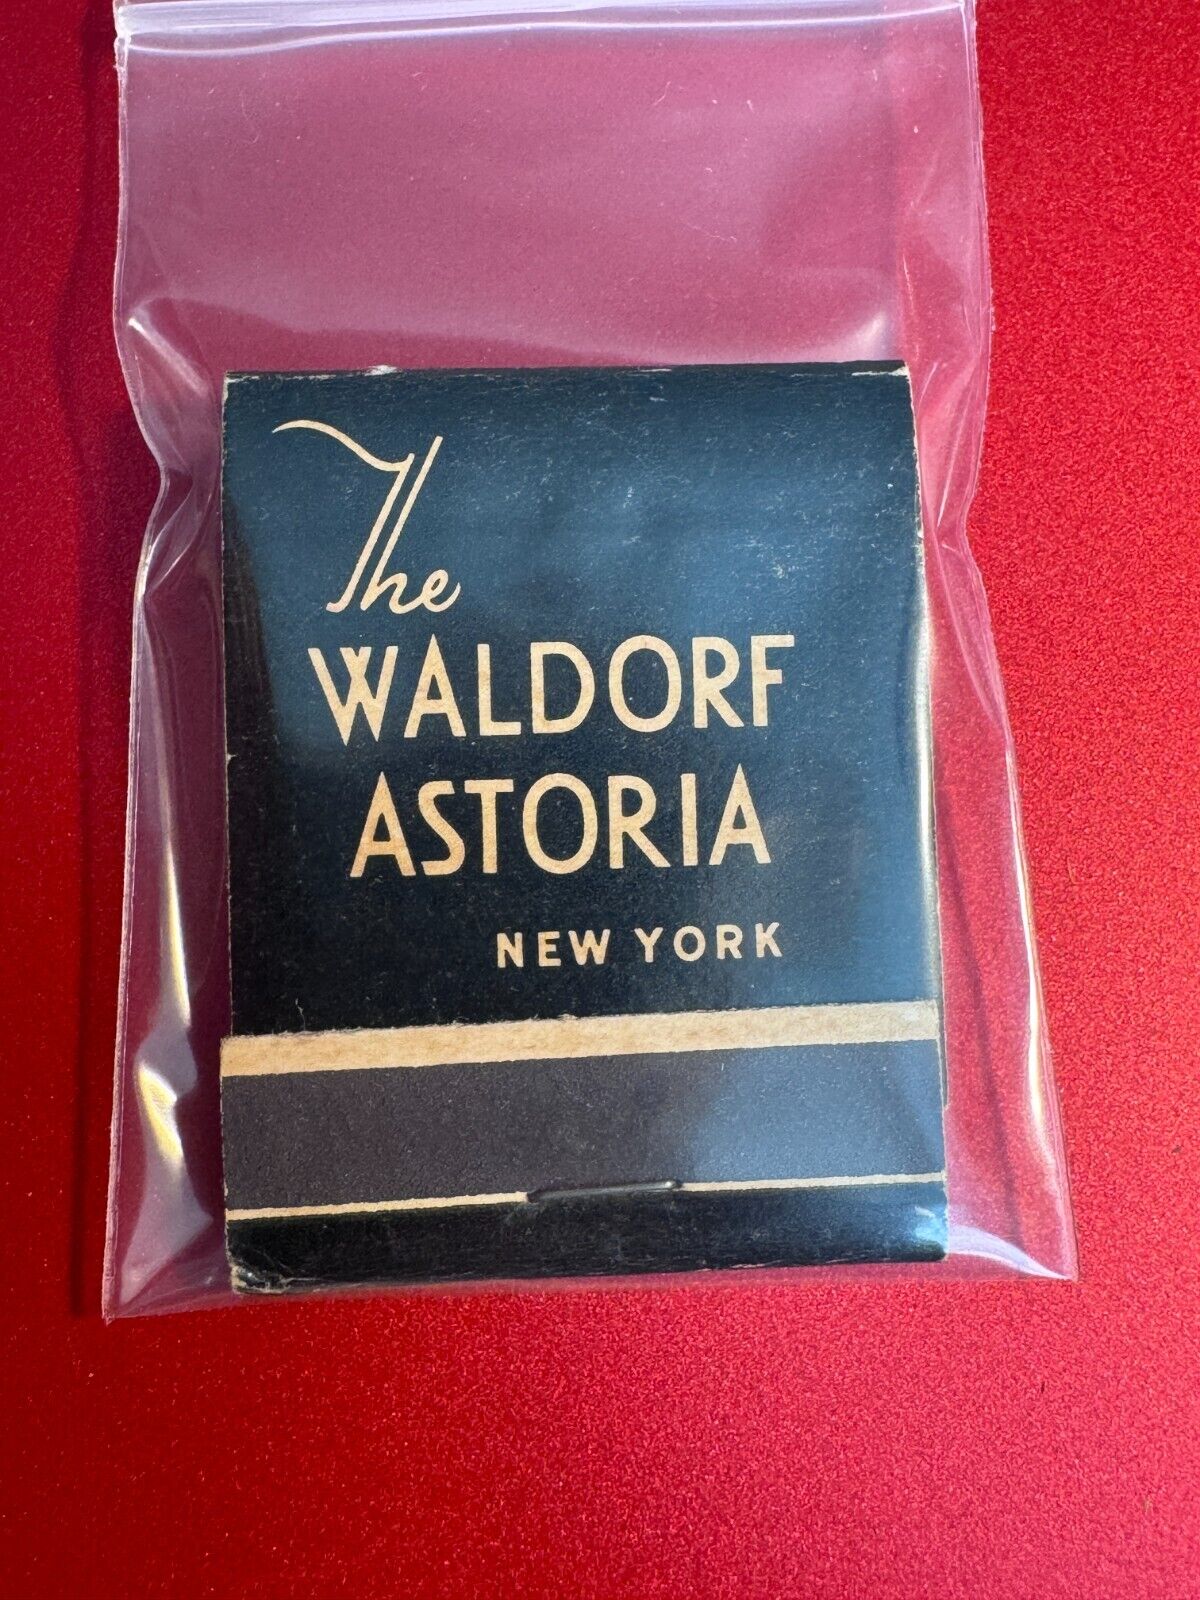 MATCHBOOK - THE WALDORF ASTORIA - NEW YORK, NY - UNSTRUCK - VERY NICE